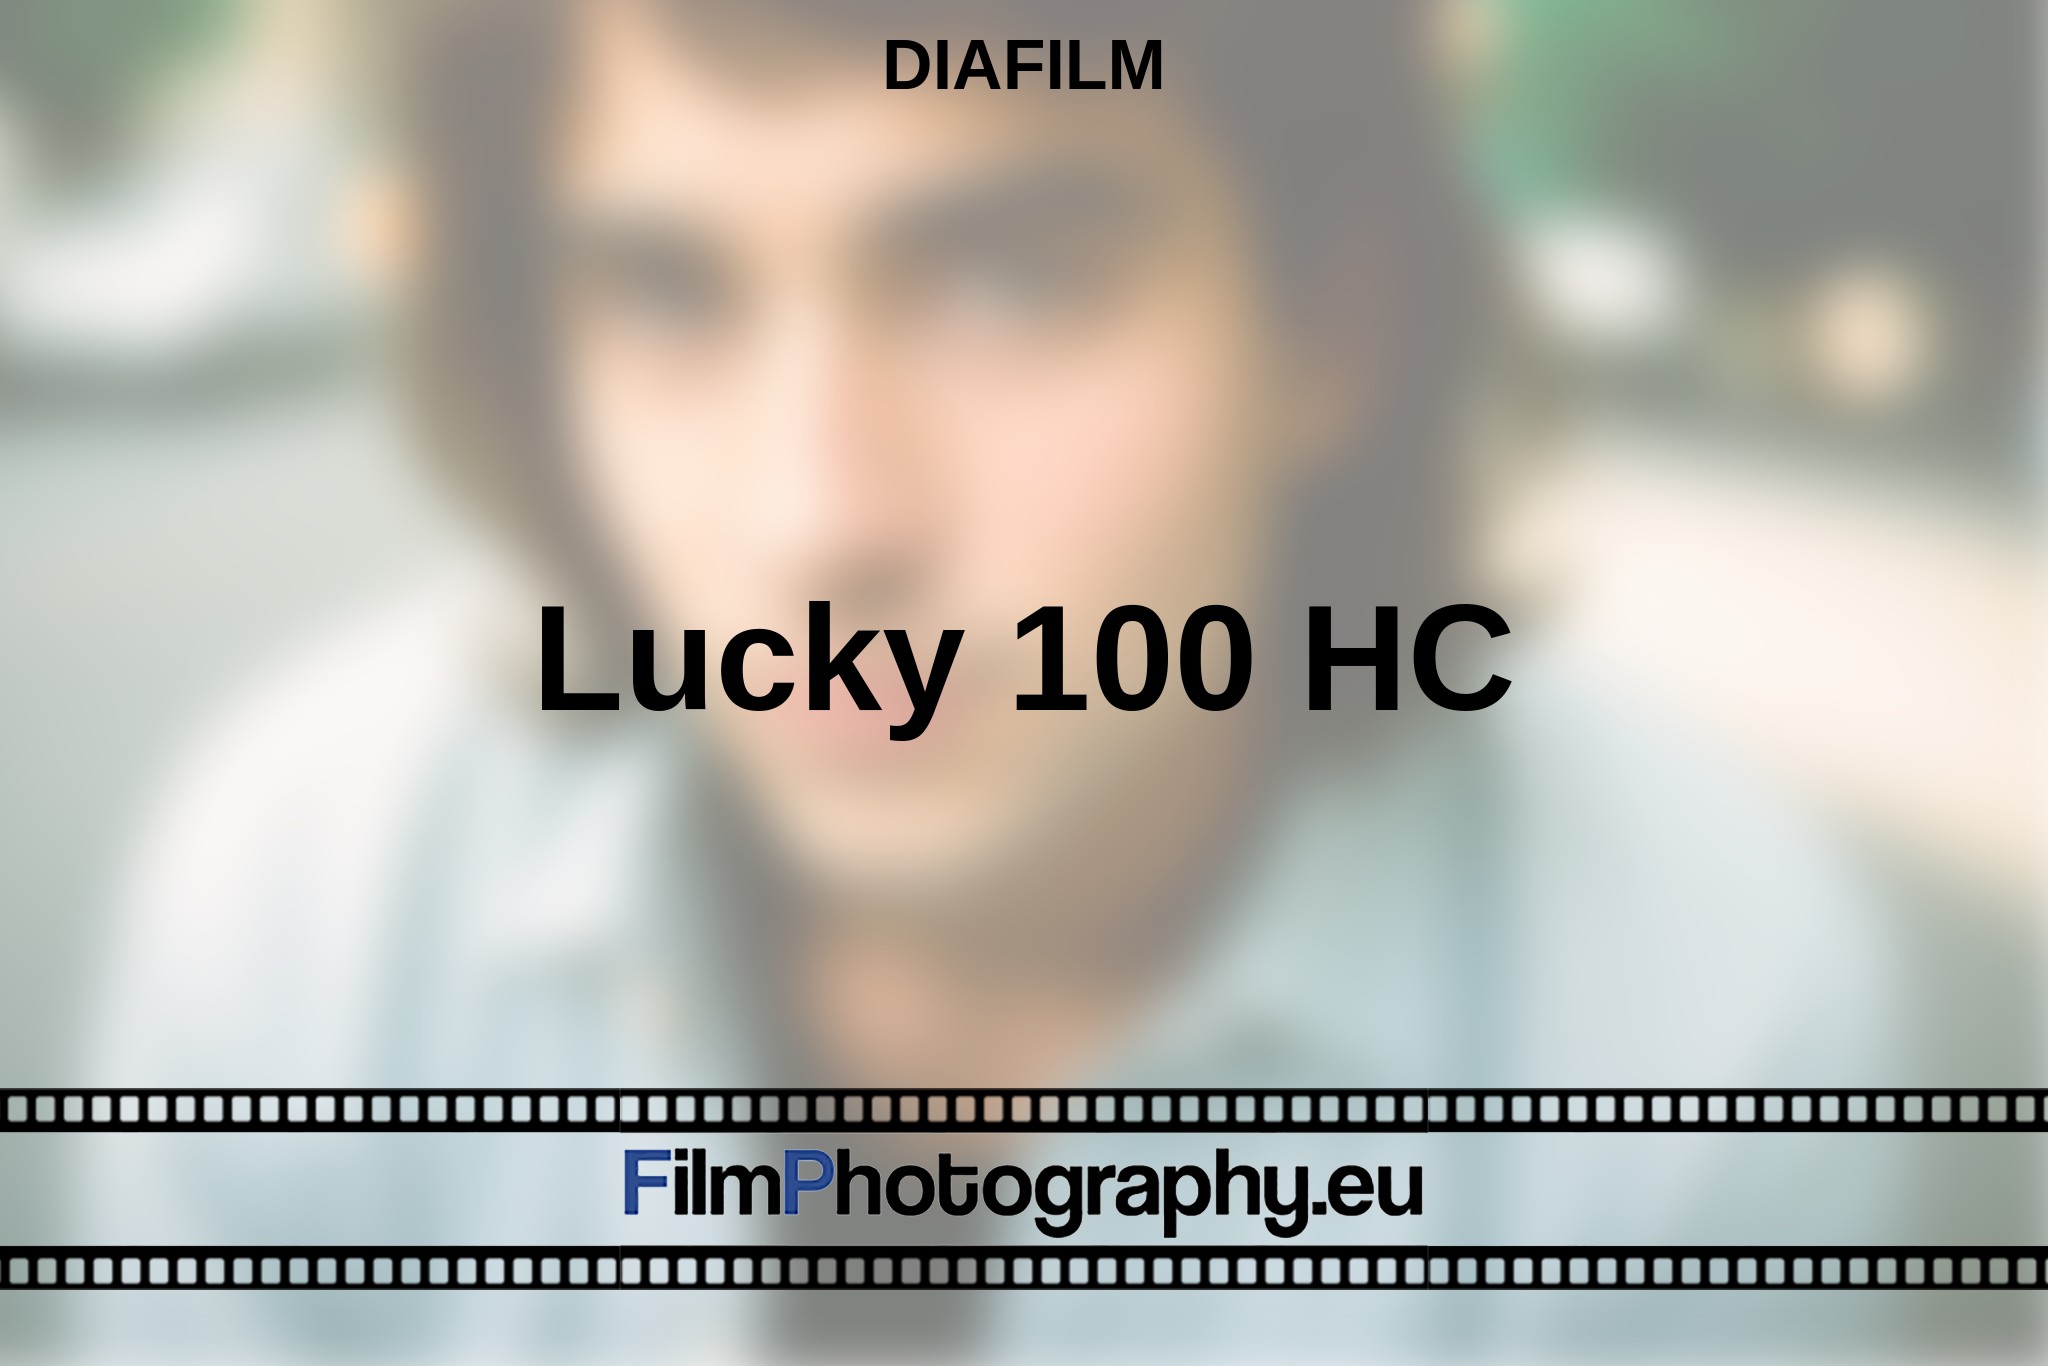 lucky-100-hc-diafilm-bnv.jpg